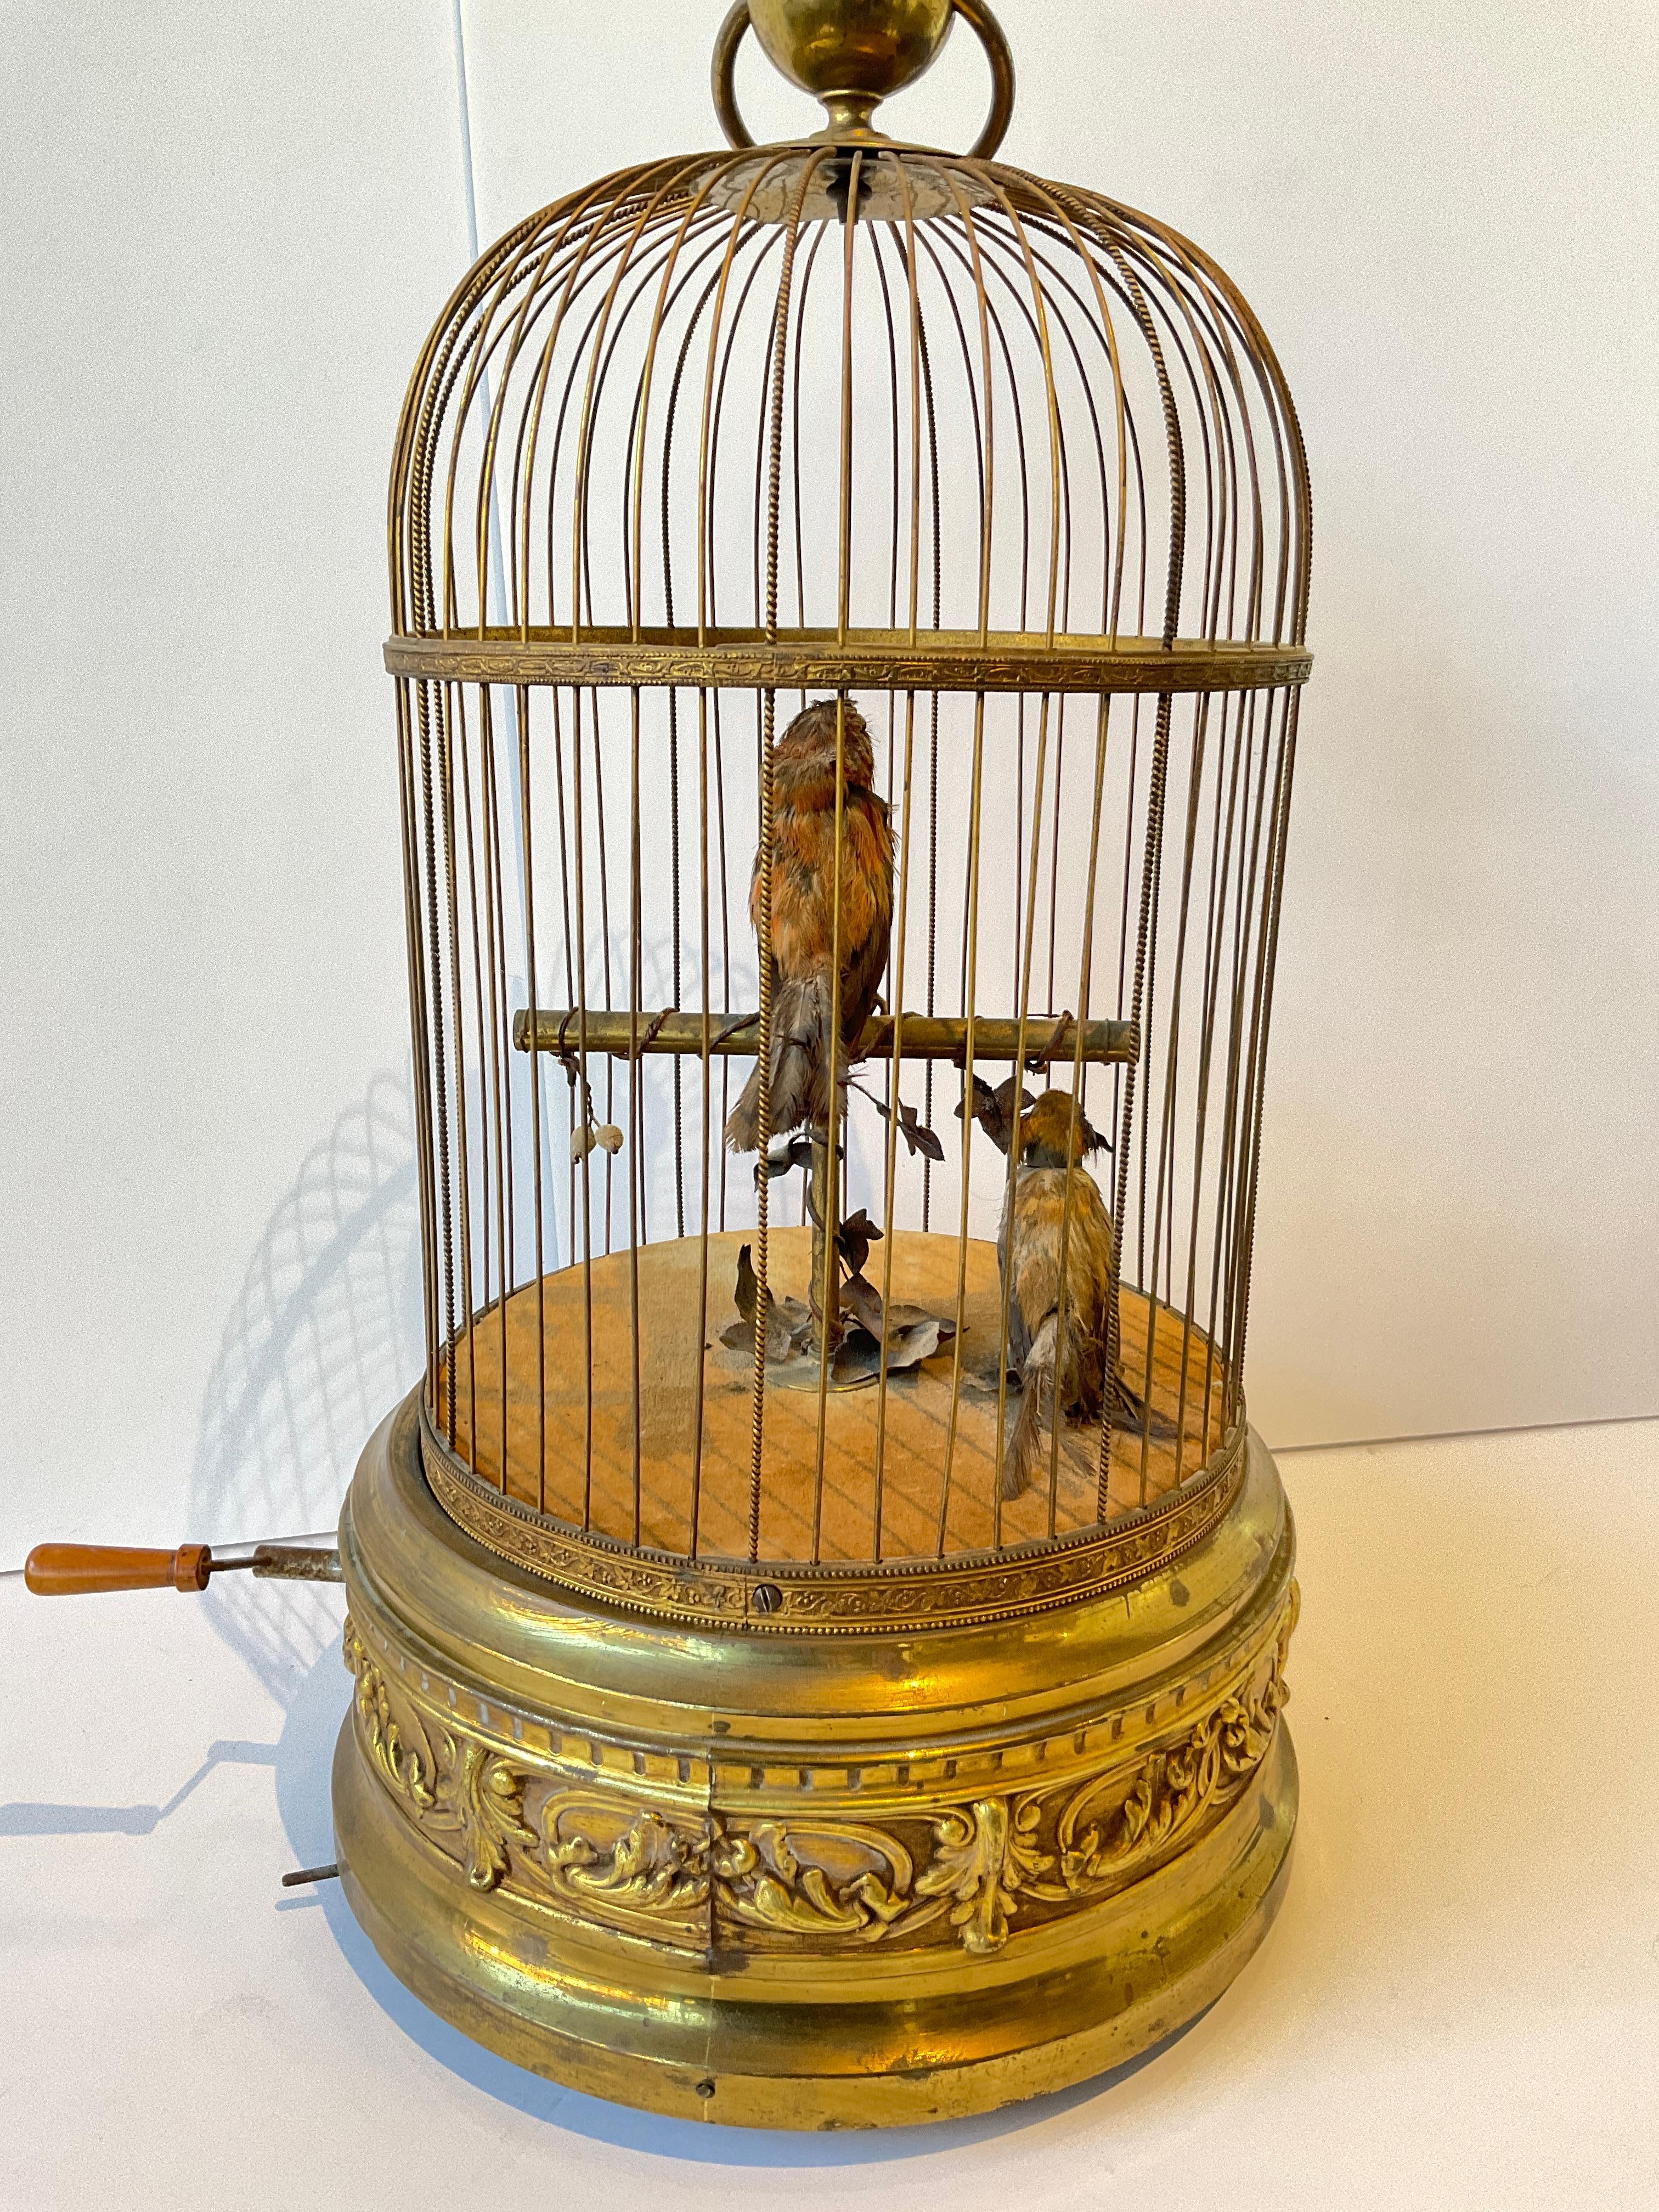 1915, French Automaton Singing Birds in Birdcage 4